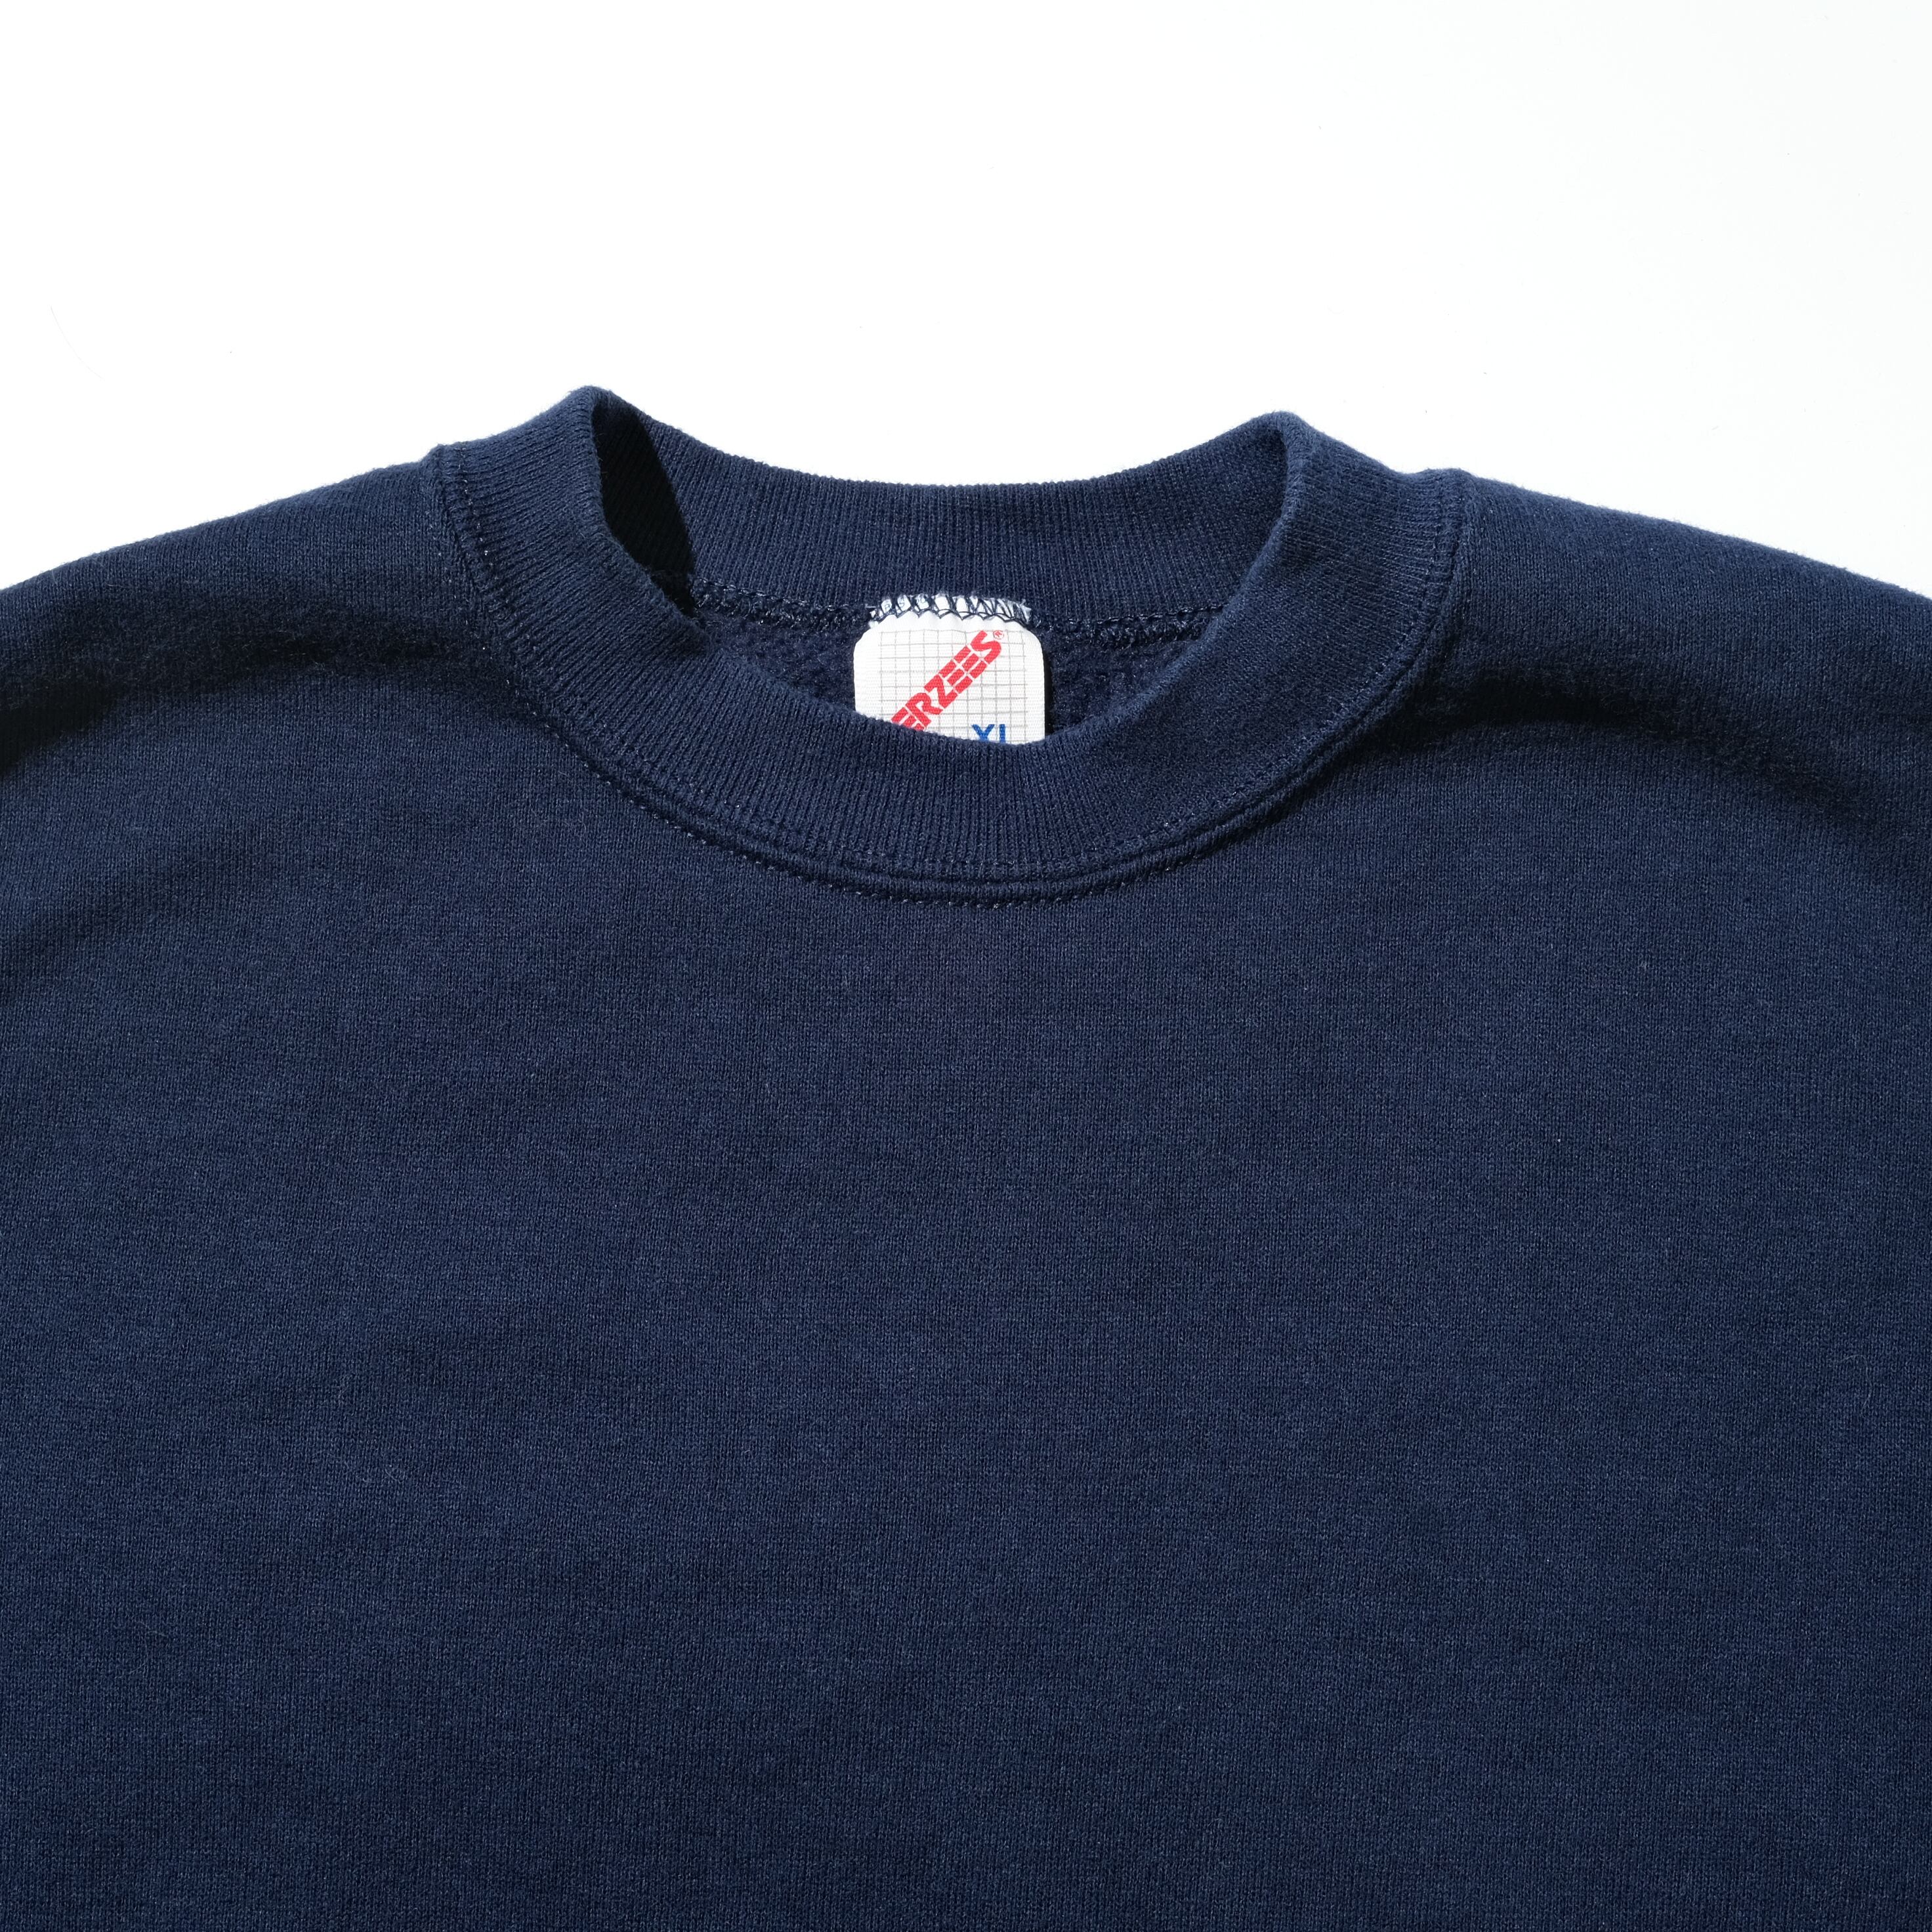 80's JERZEES blank sweat shirt made in USA size XL | goodbuy